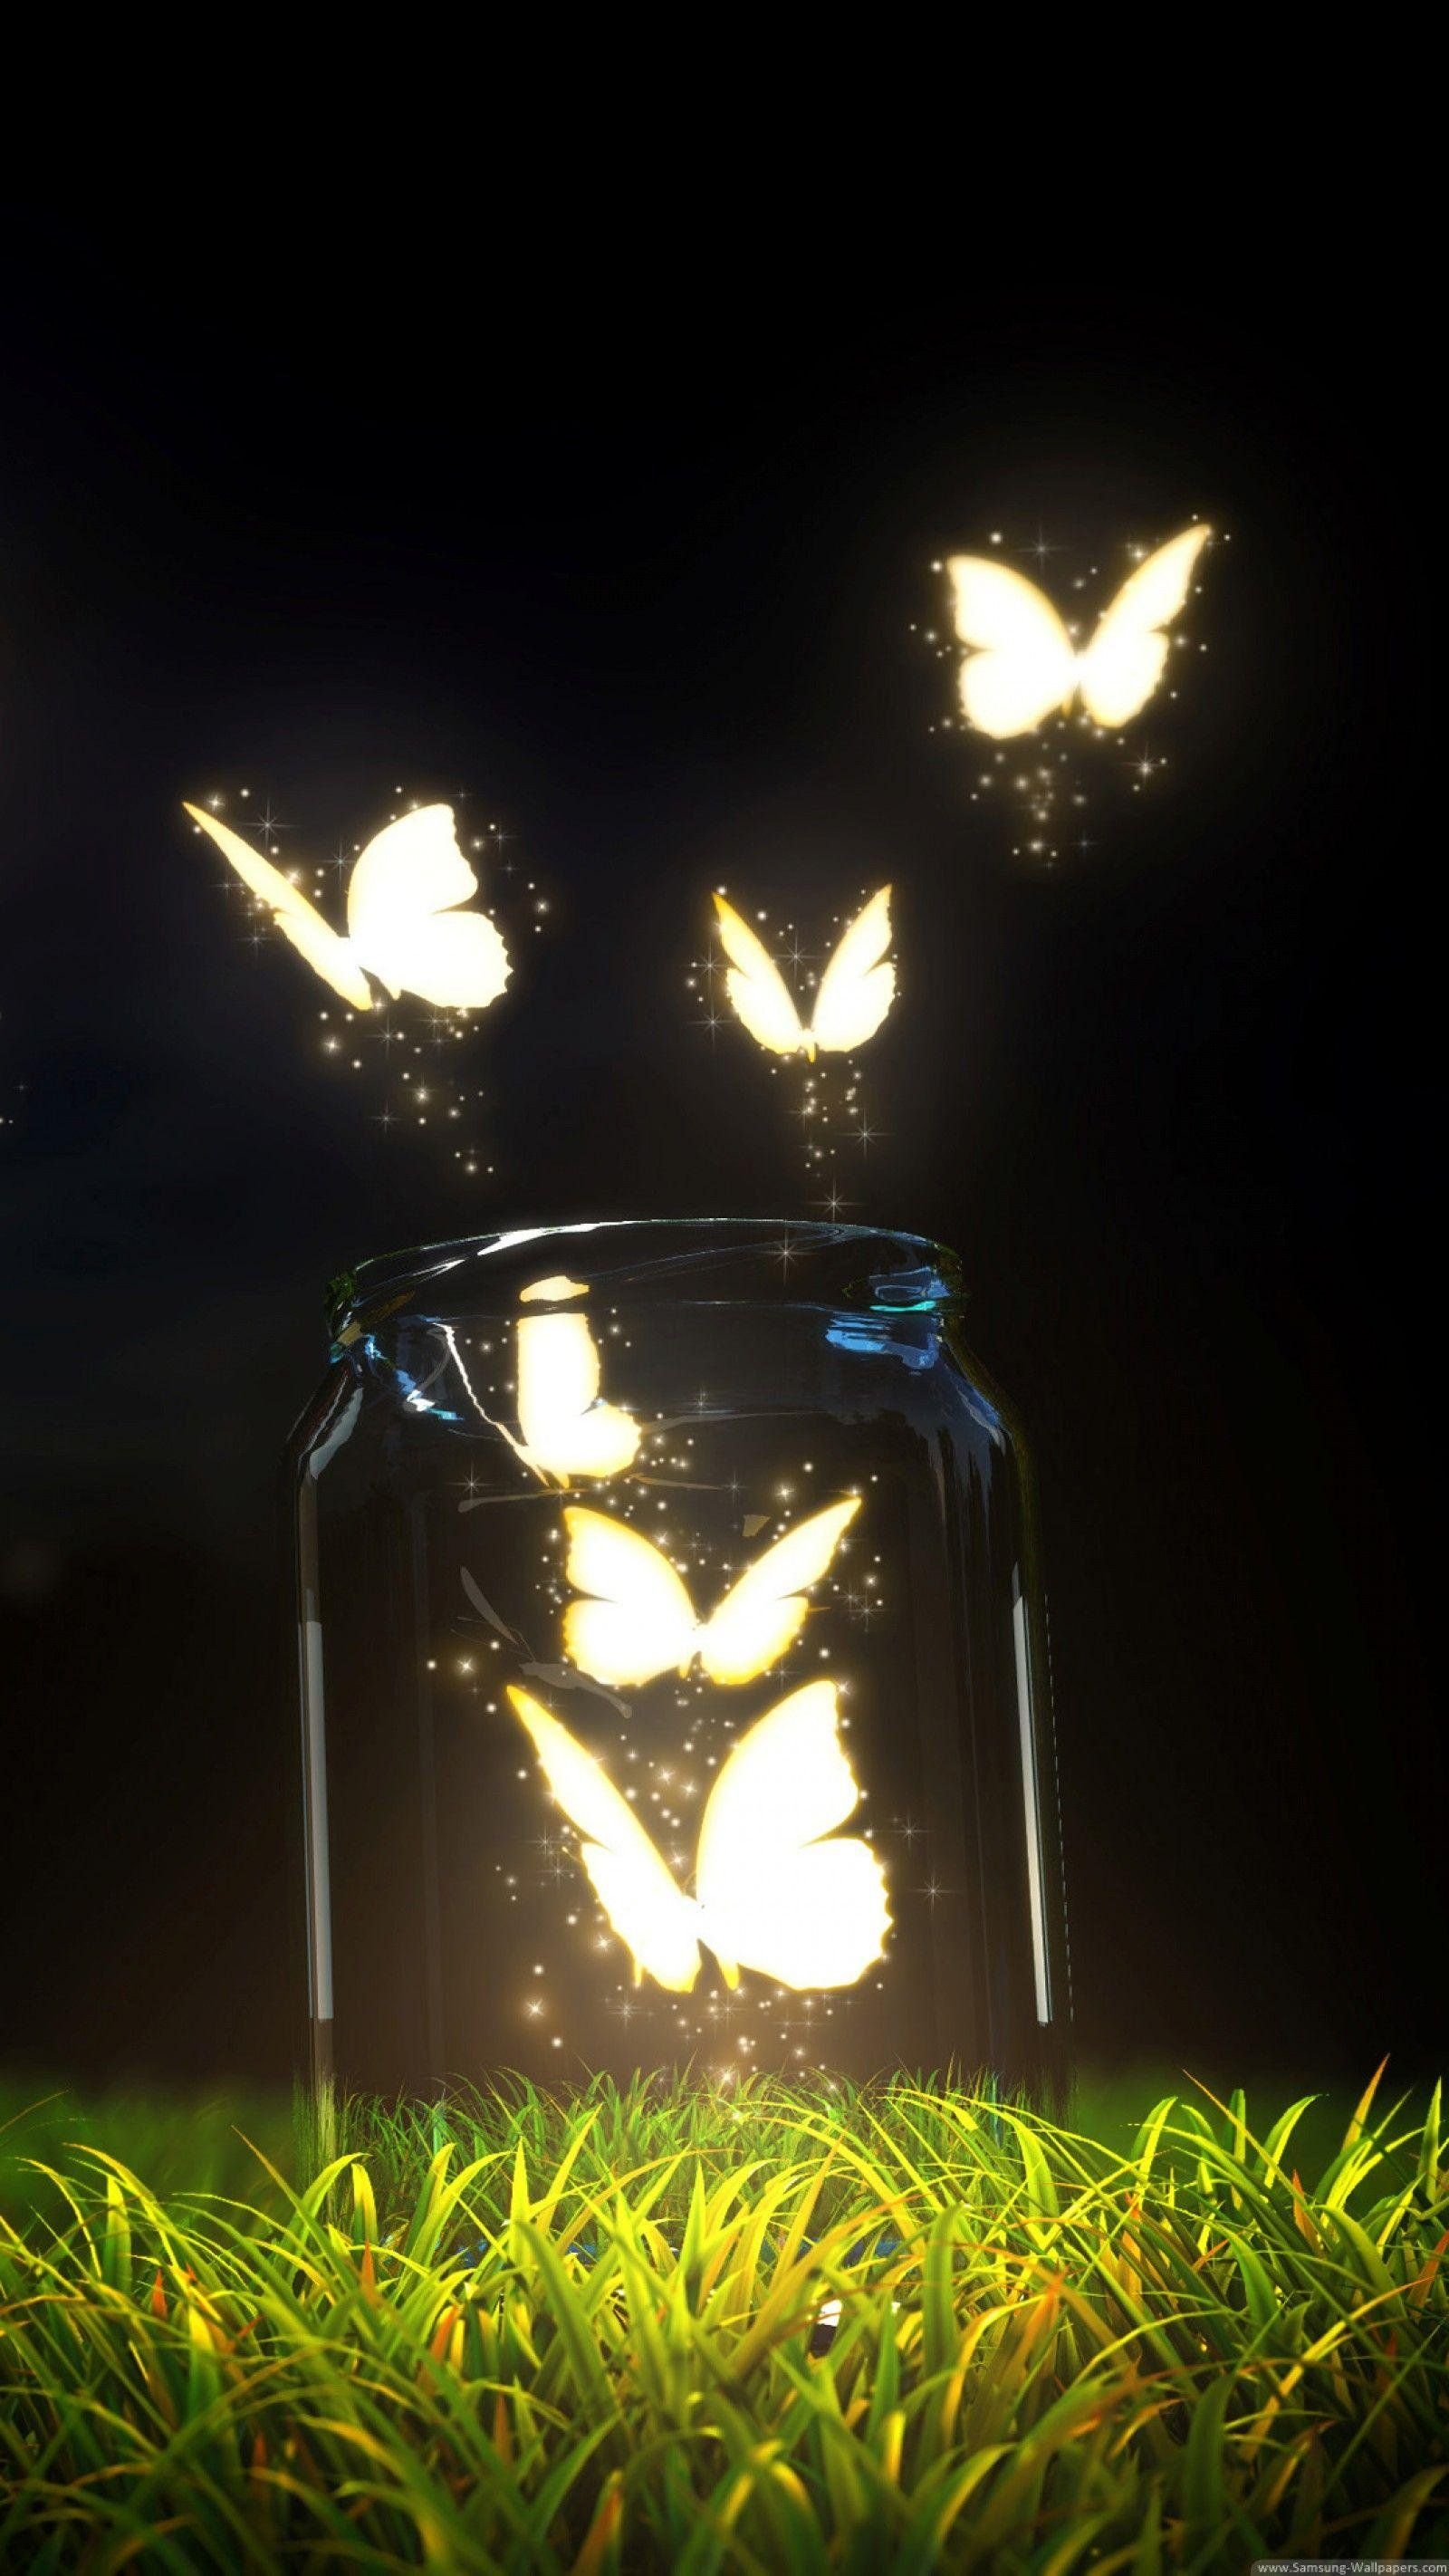 Aesthetic magic butterflies Wallpaper Download - Magic